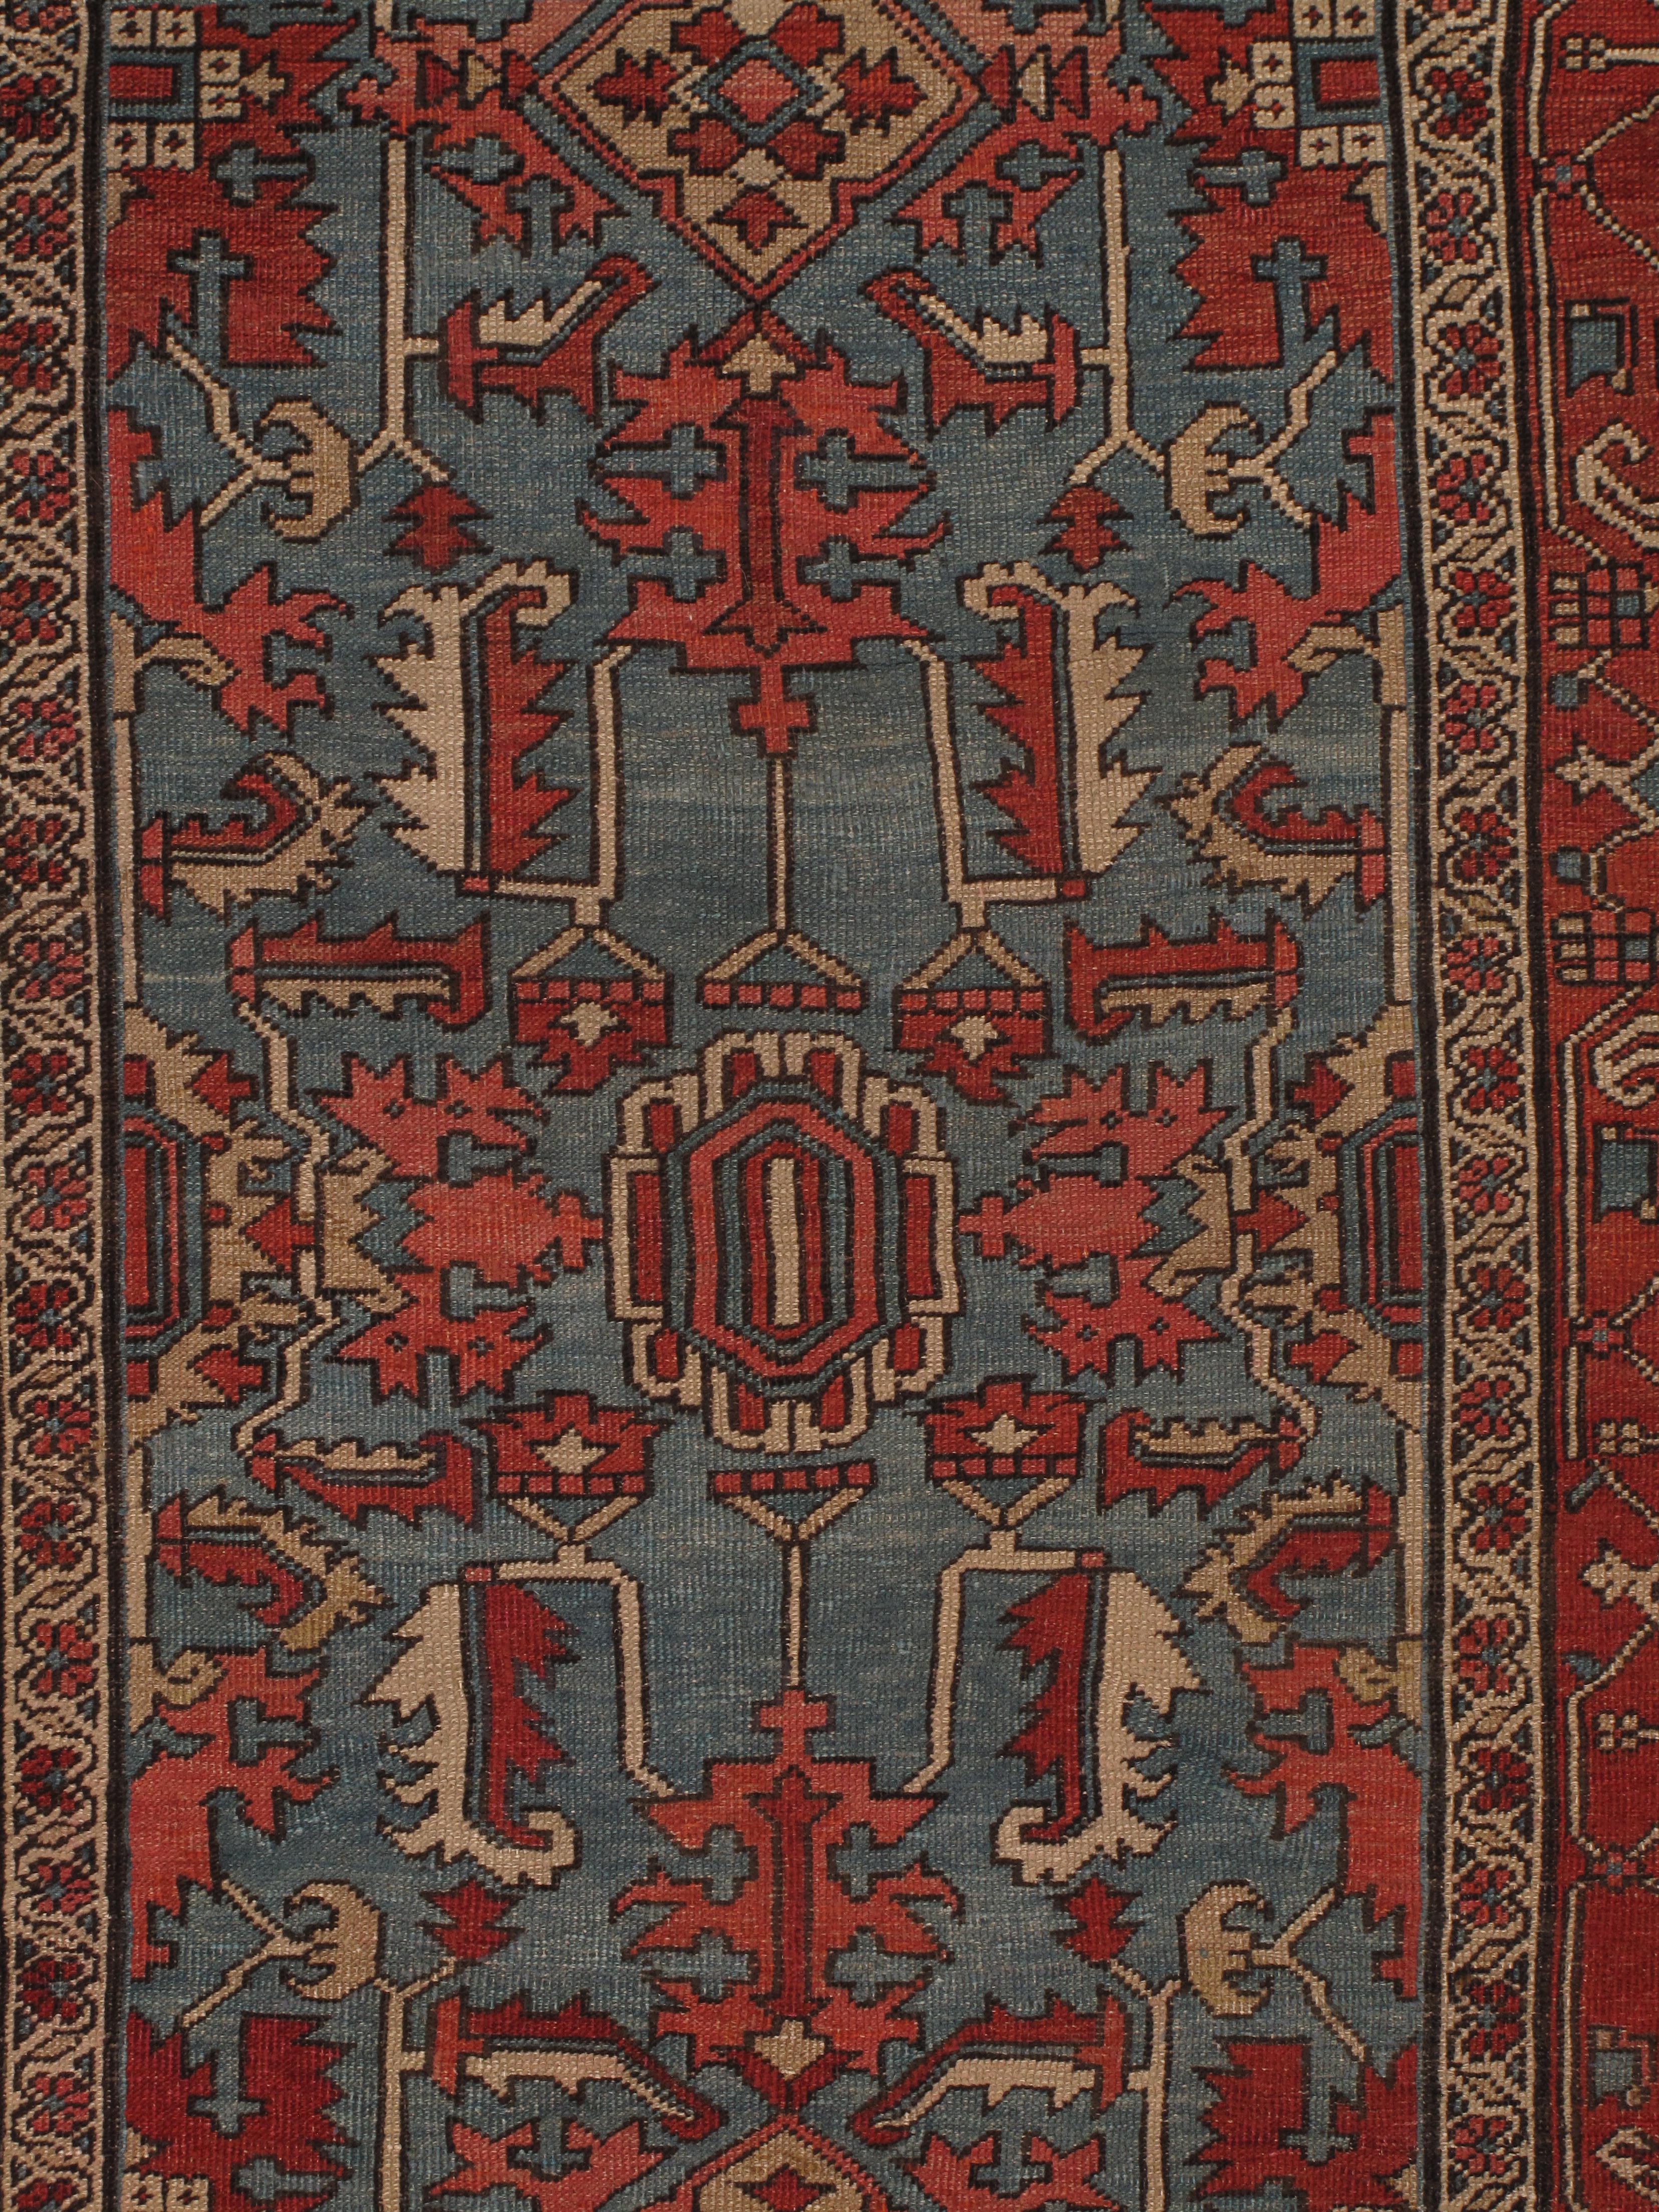 19th Century Antique Persian Serapi Carpet Handmade Wool Oriental Rug Rust, Ivory, Light Blue For Sale